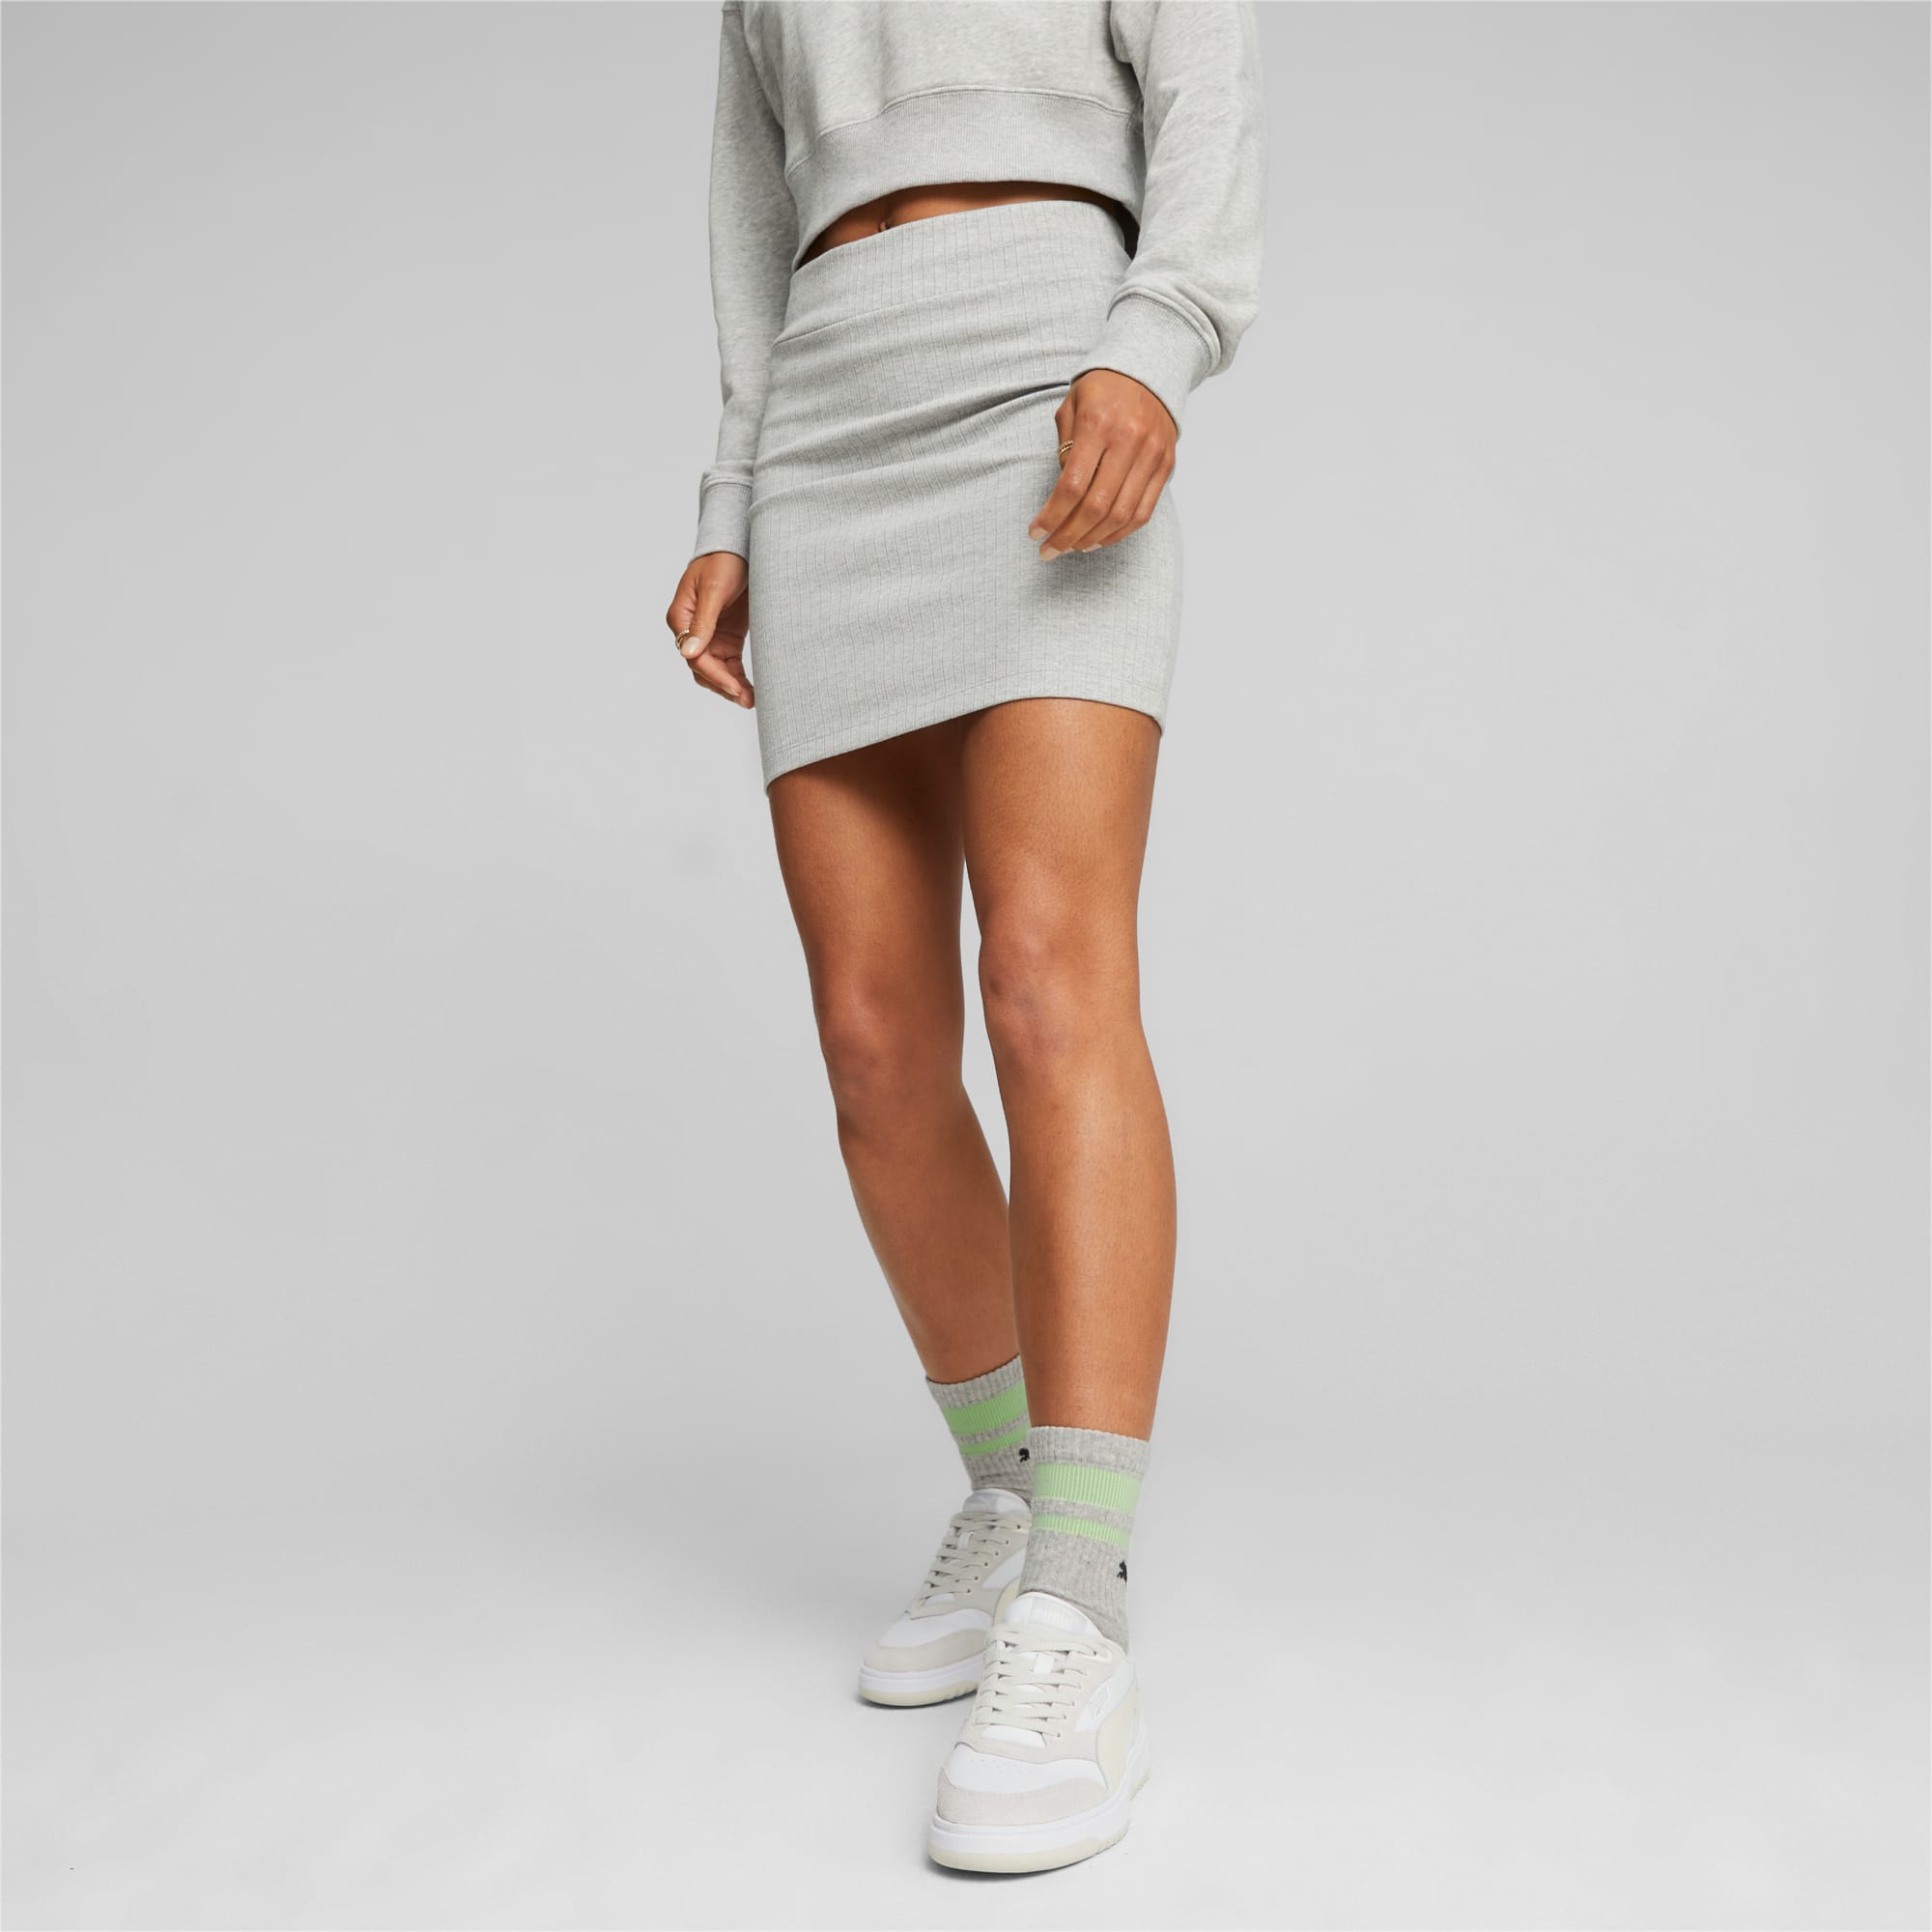 PUMA Classics Women's Ribbed Skirt, Light Grey Heather, Size XS, Clothing